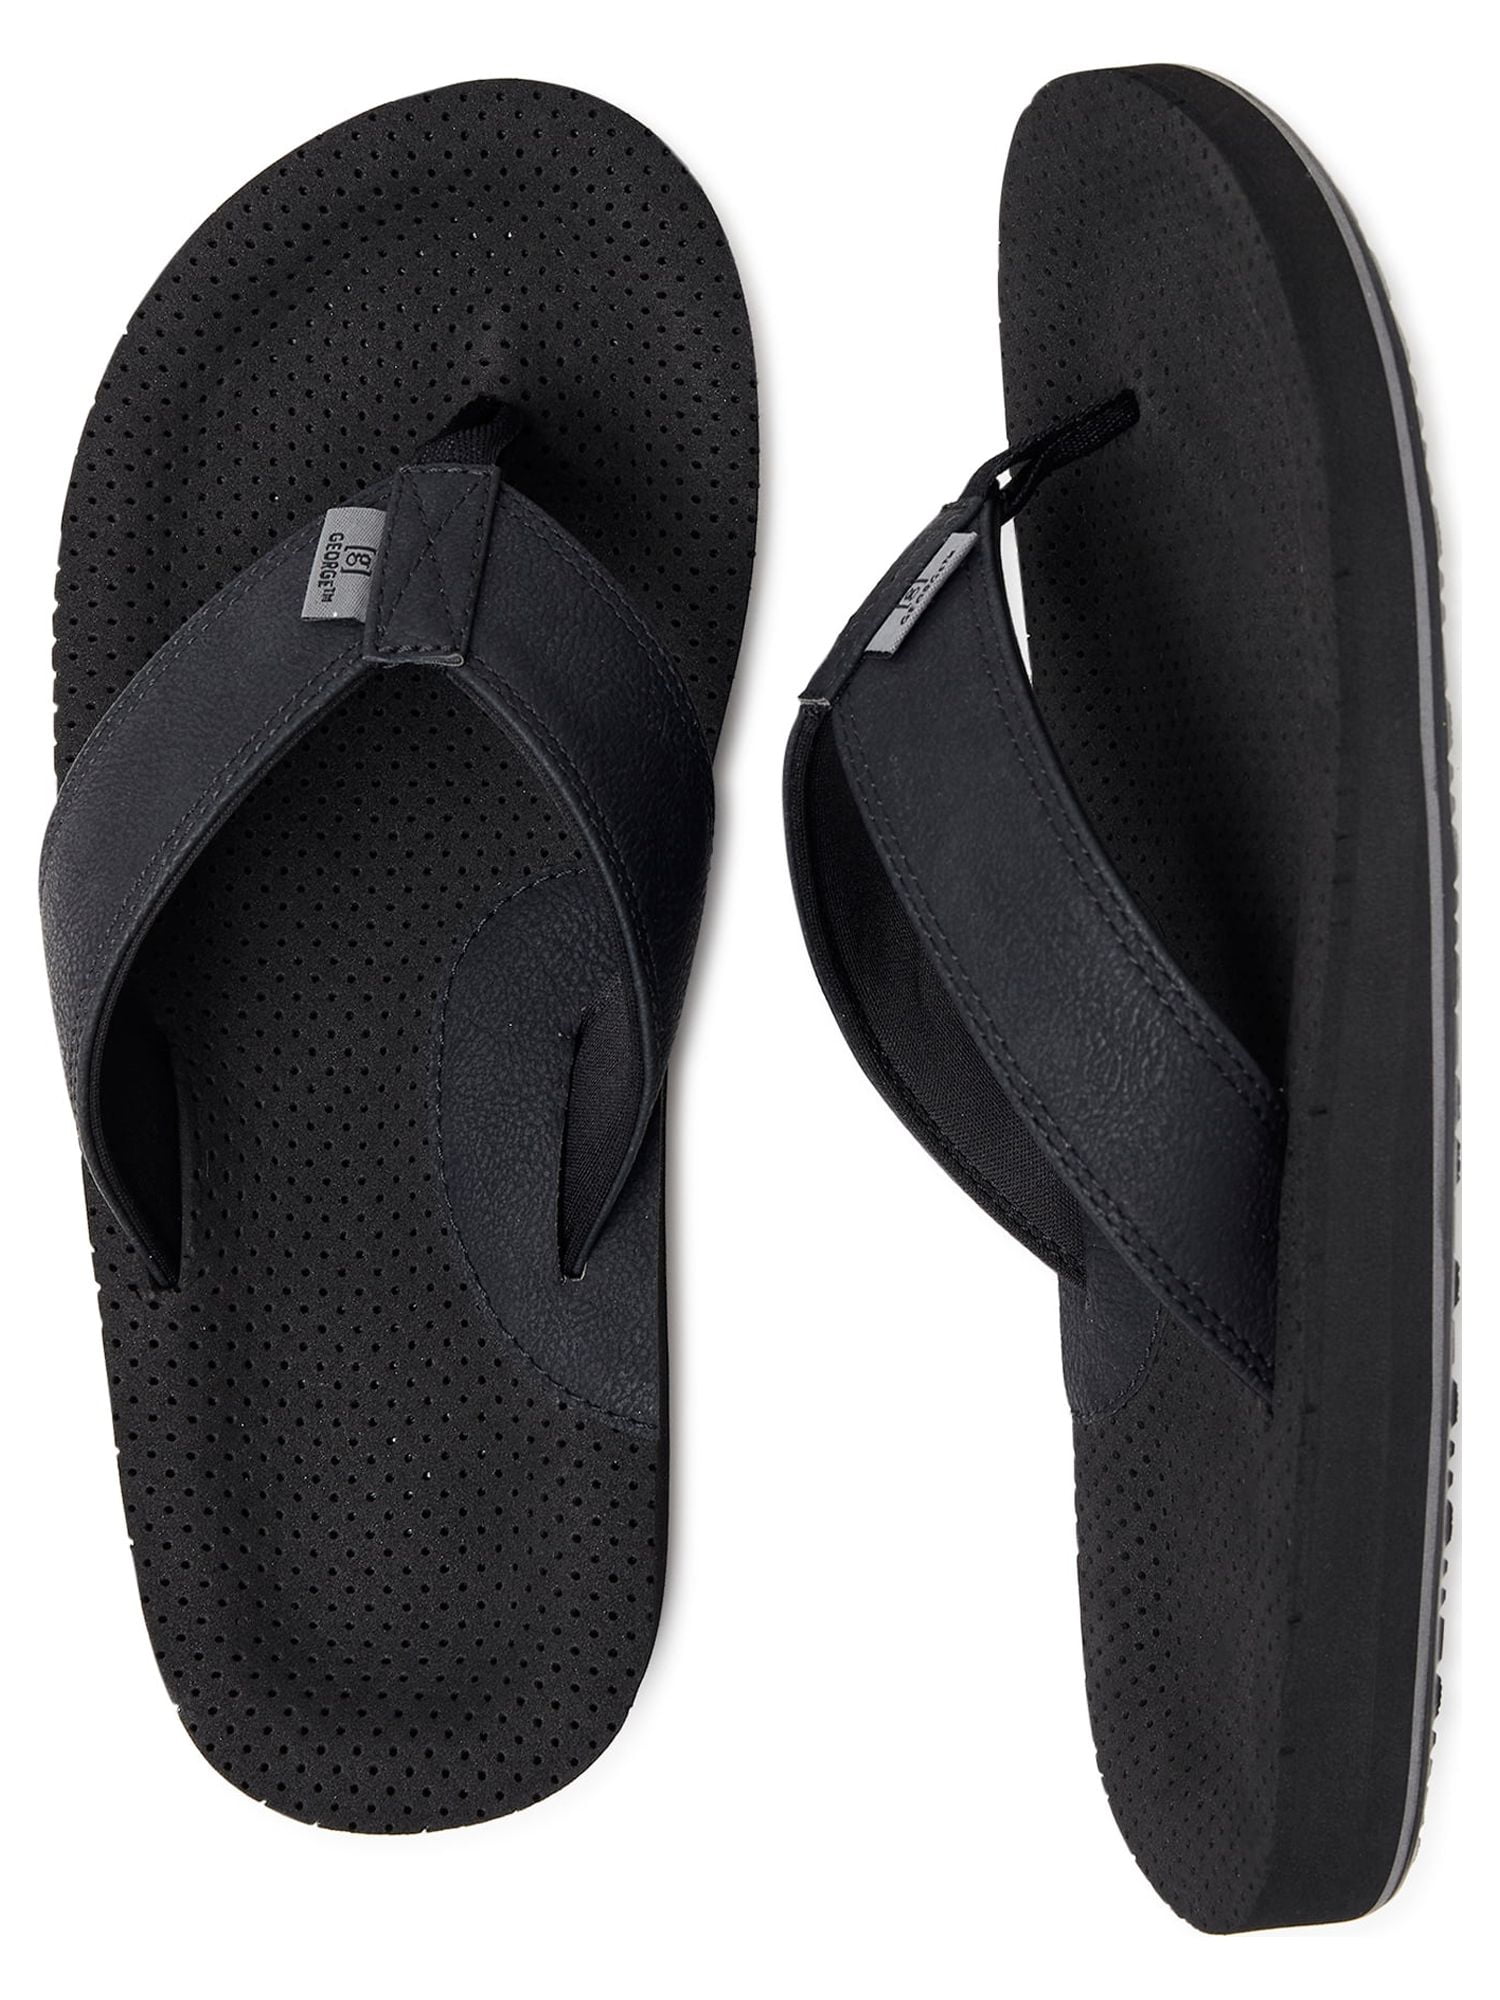 George Men's Casual Beach Perforated Flip-Flop Sandals - Walmart.com